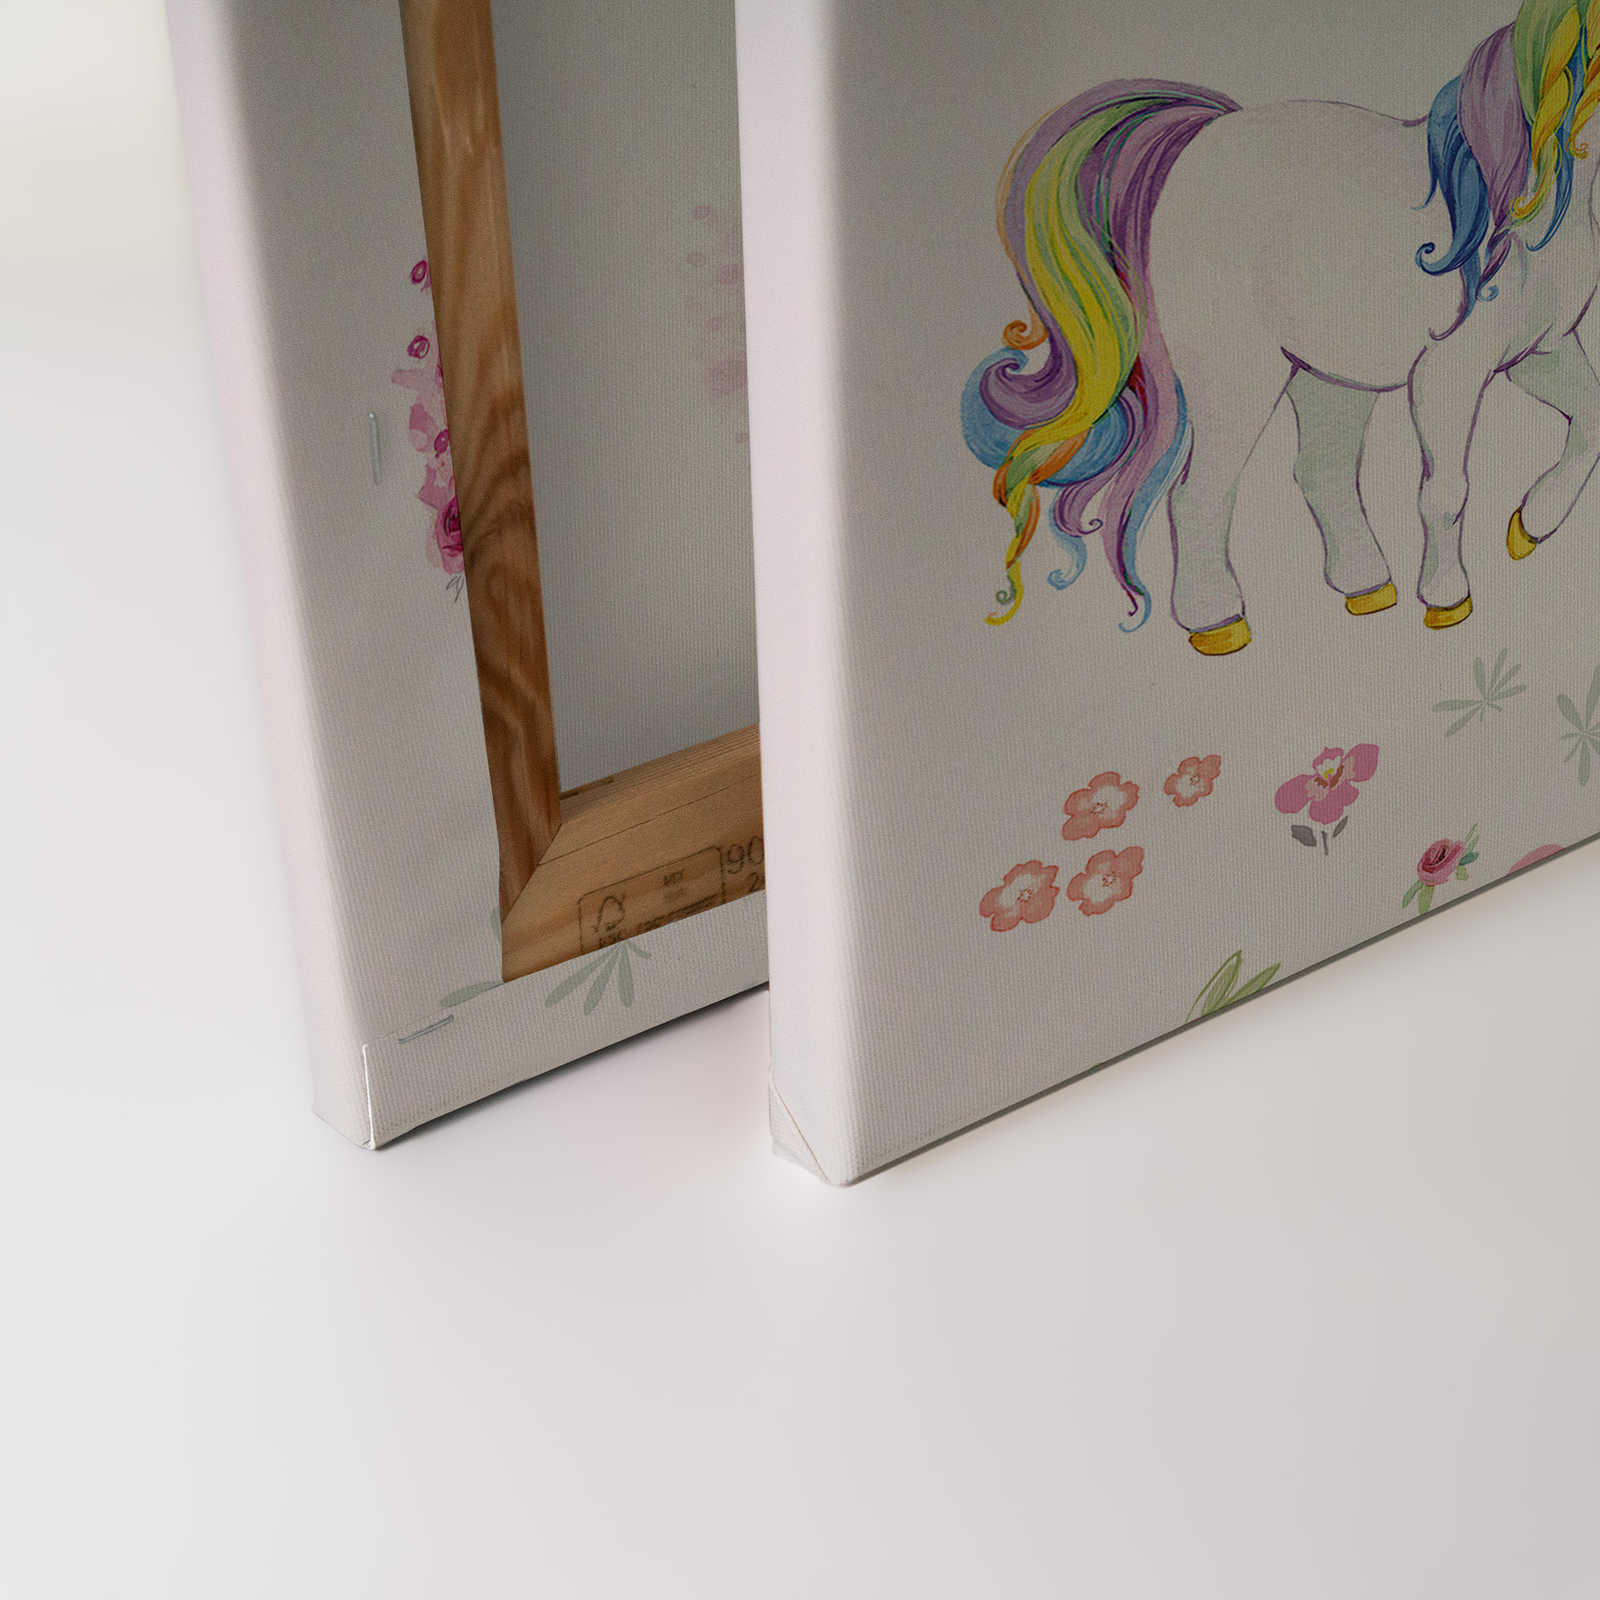             Canvas painting Nursery with princess and unicorn - 0,90 m x 0,60 m
        